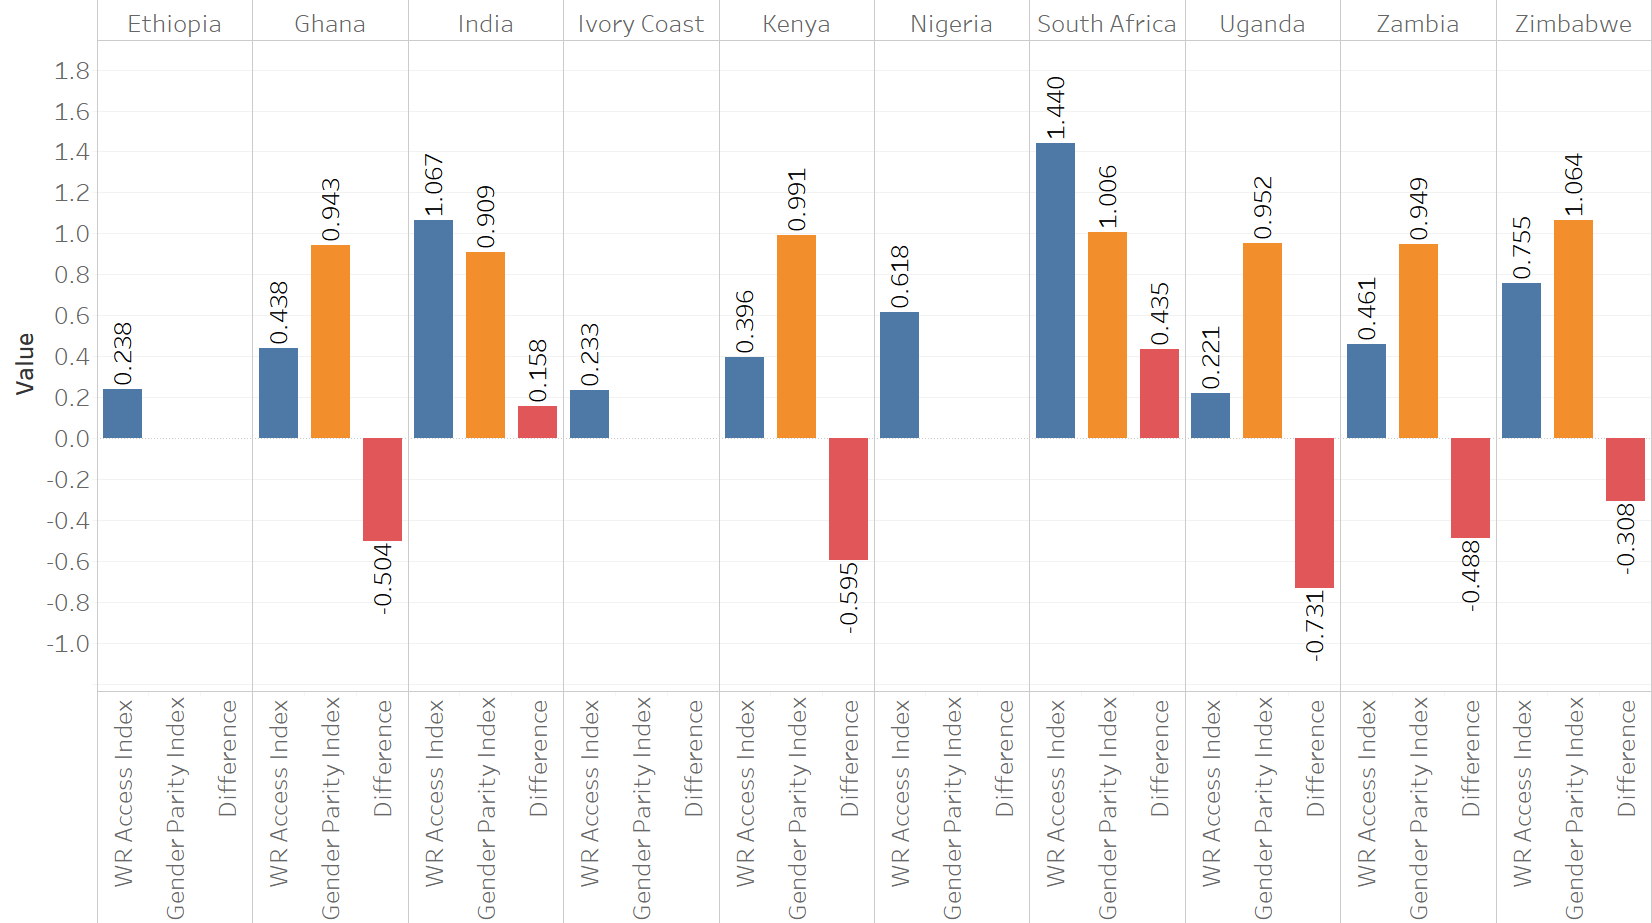 Barchart: Gender Parity Index and Worldreader Data Comparison